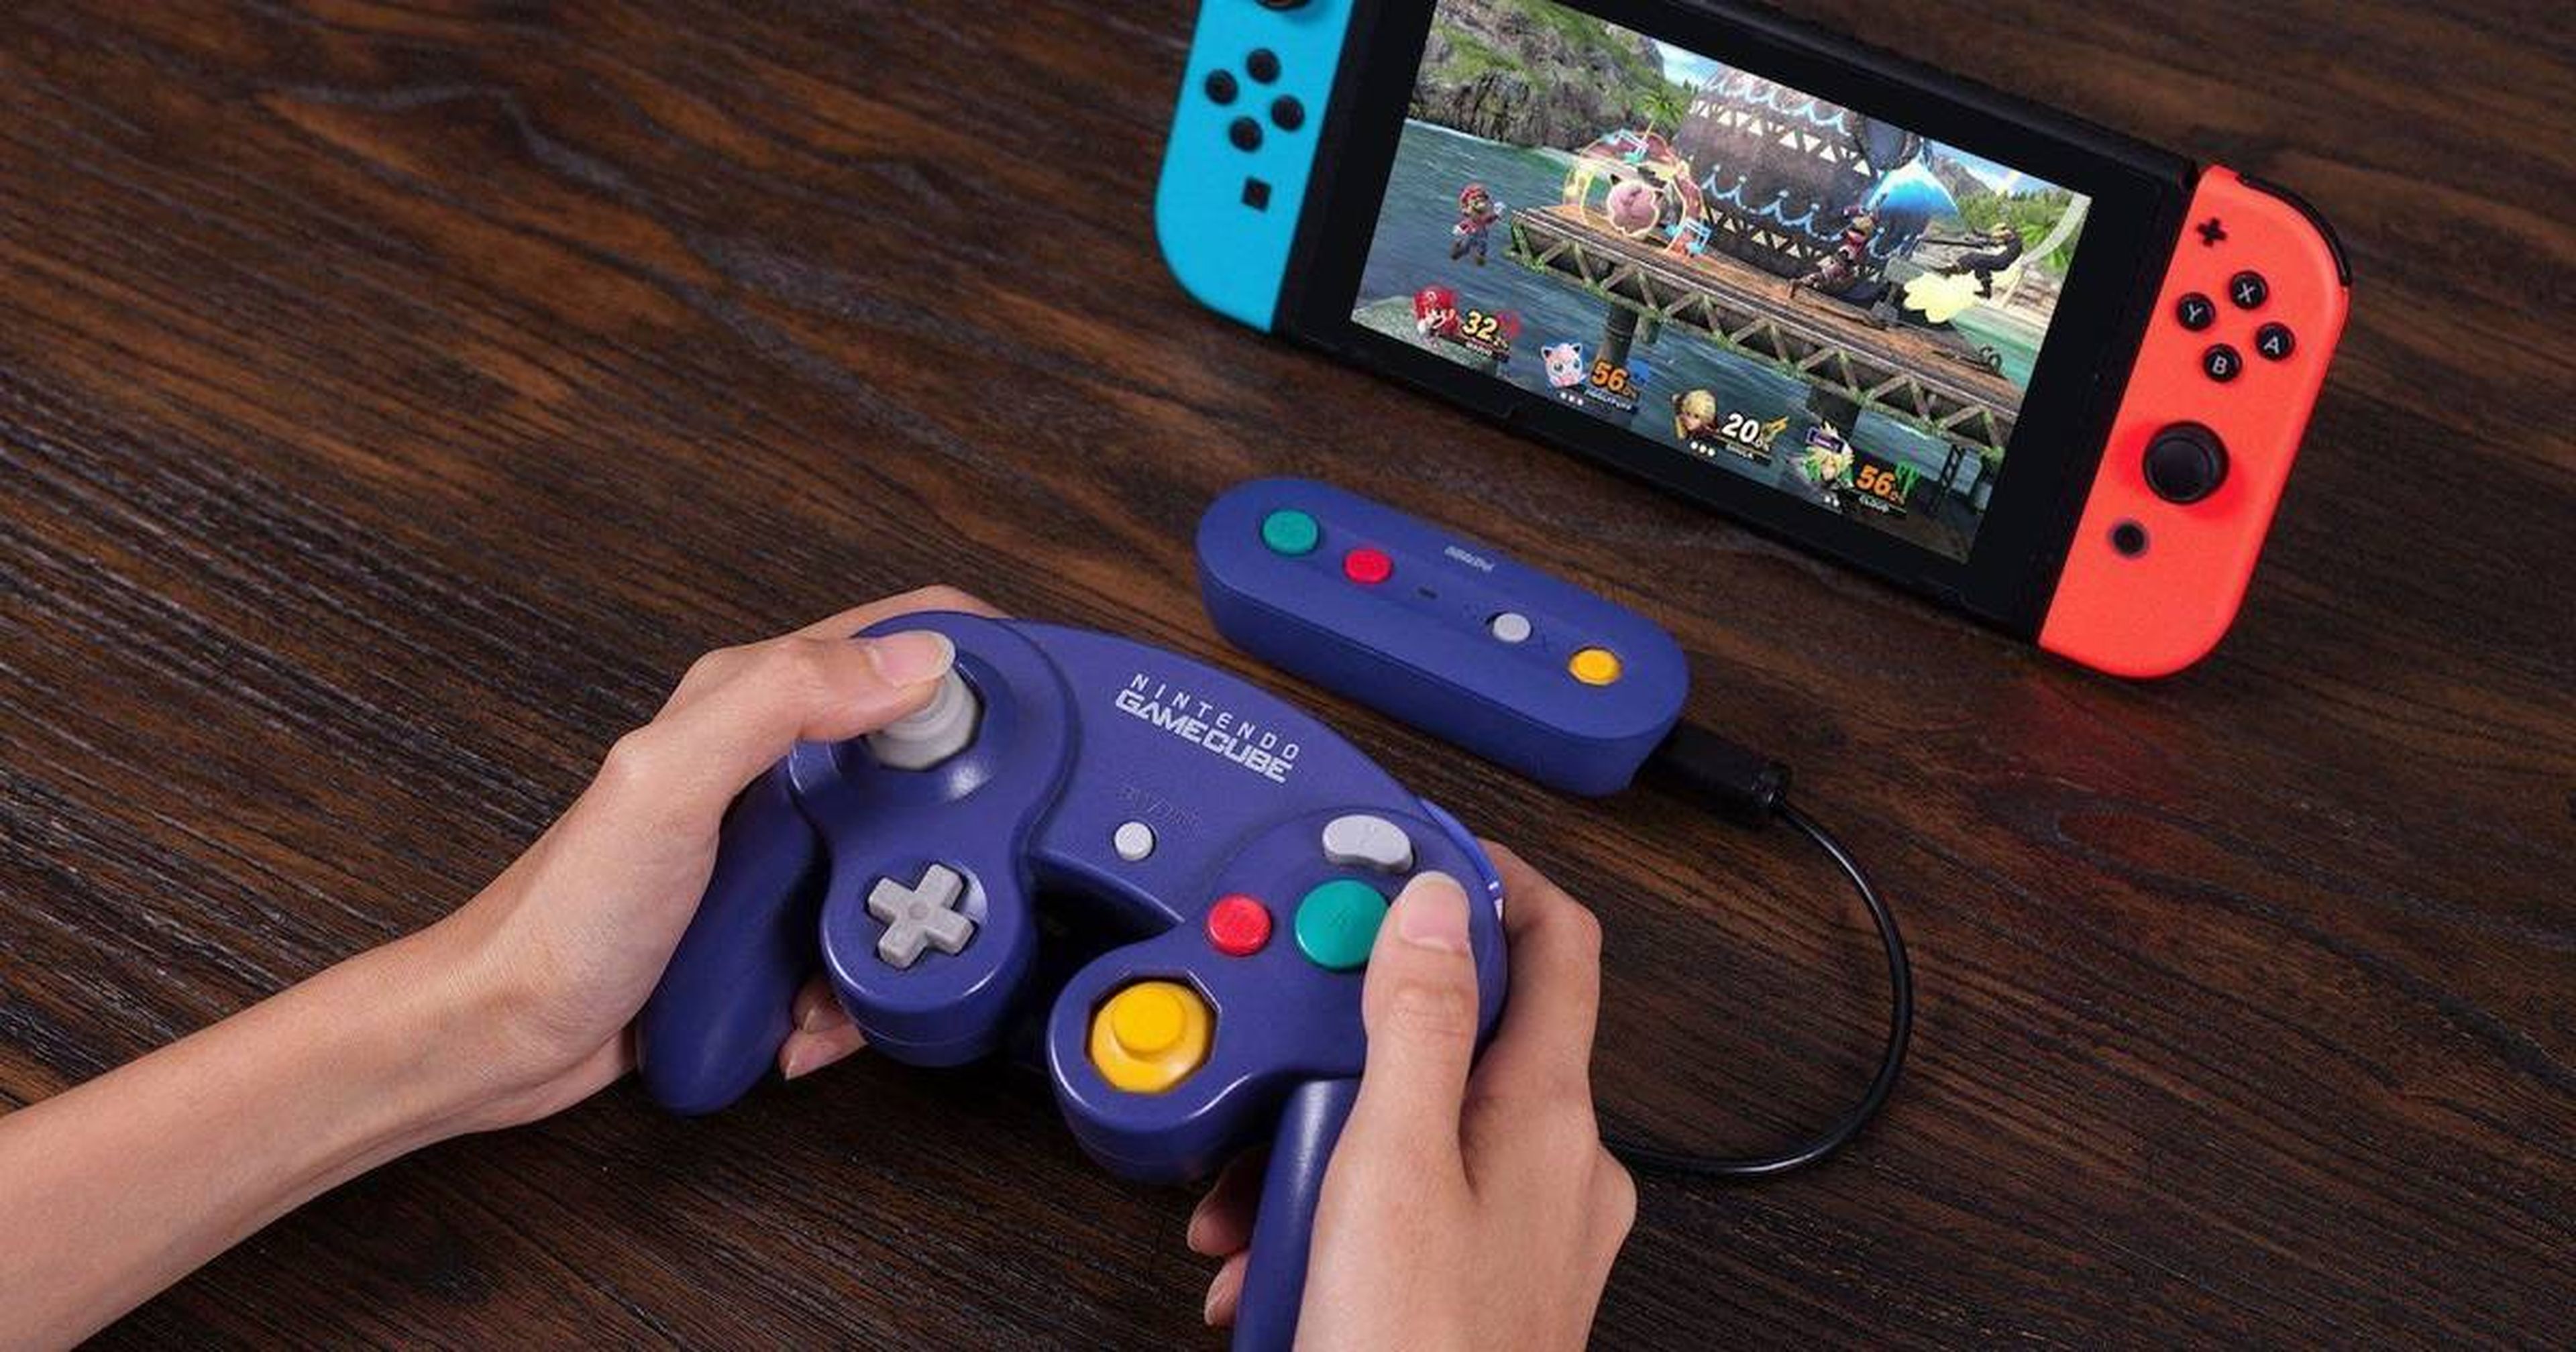 Juega a los títulos de GameCube como antaño con este mando inalámbrico  inalámbrico para Nintendo Switch por 34 euros